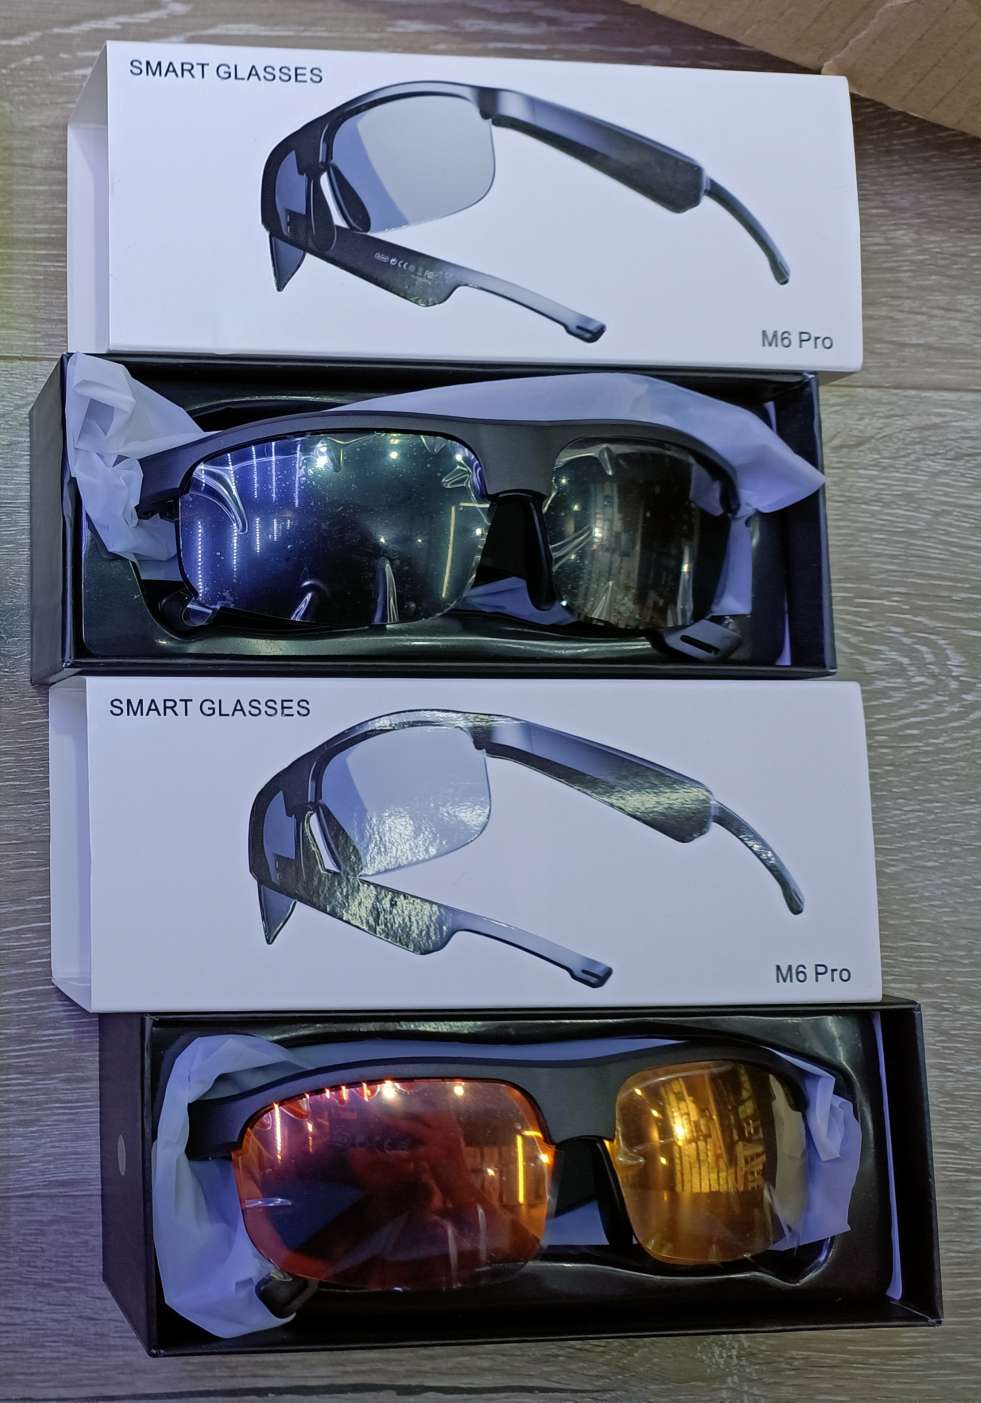 M6 Pro 智能蓝牙耳机眼镜 集电话音乐眼镜于一体 防紫外线详情图1